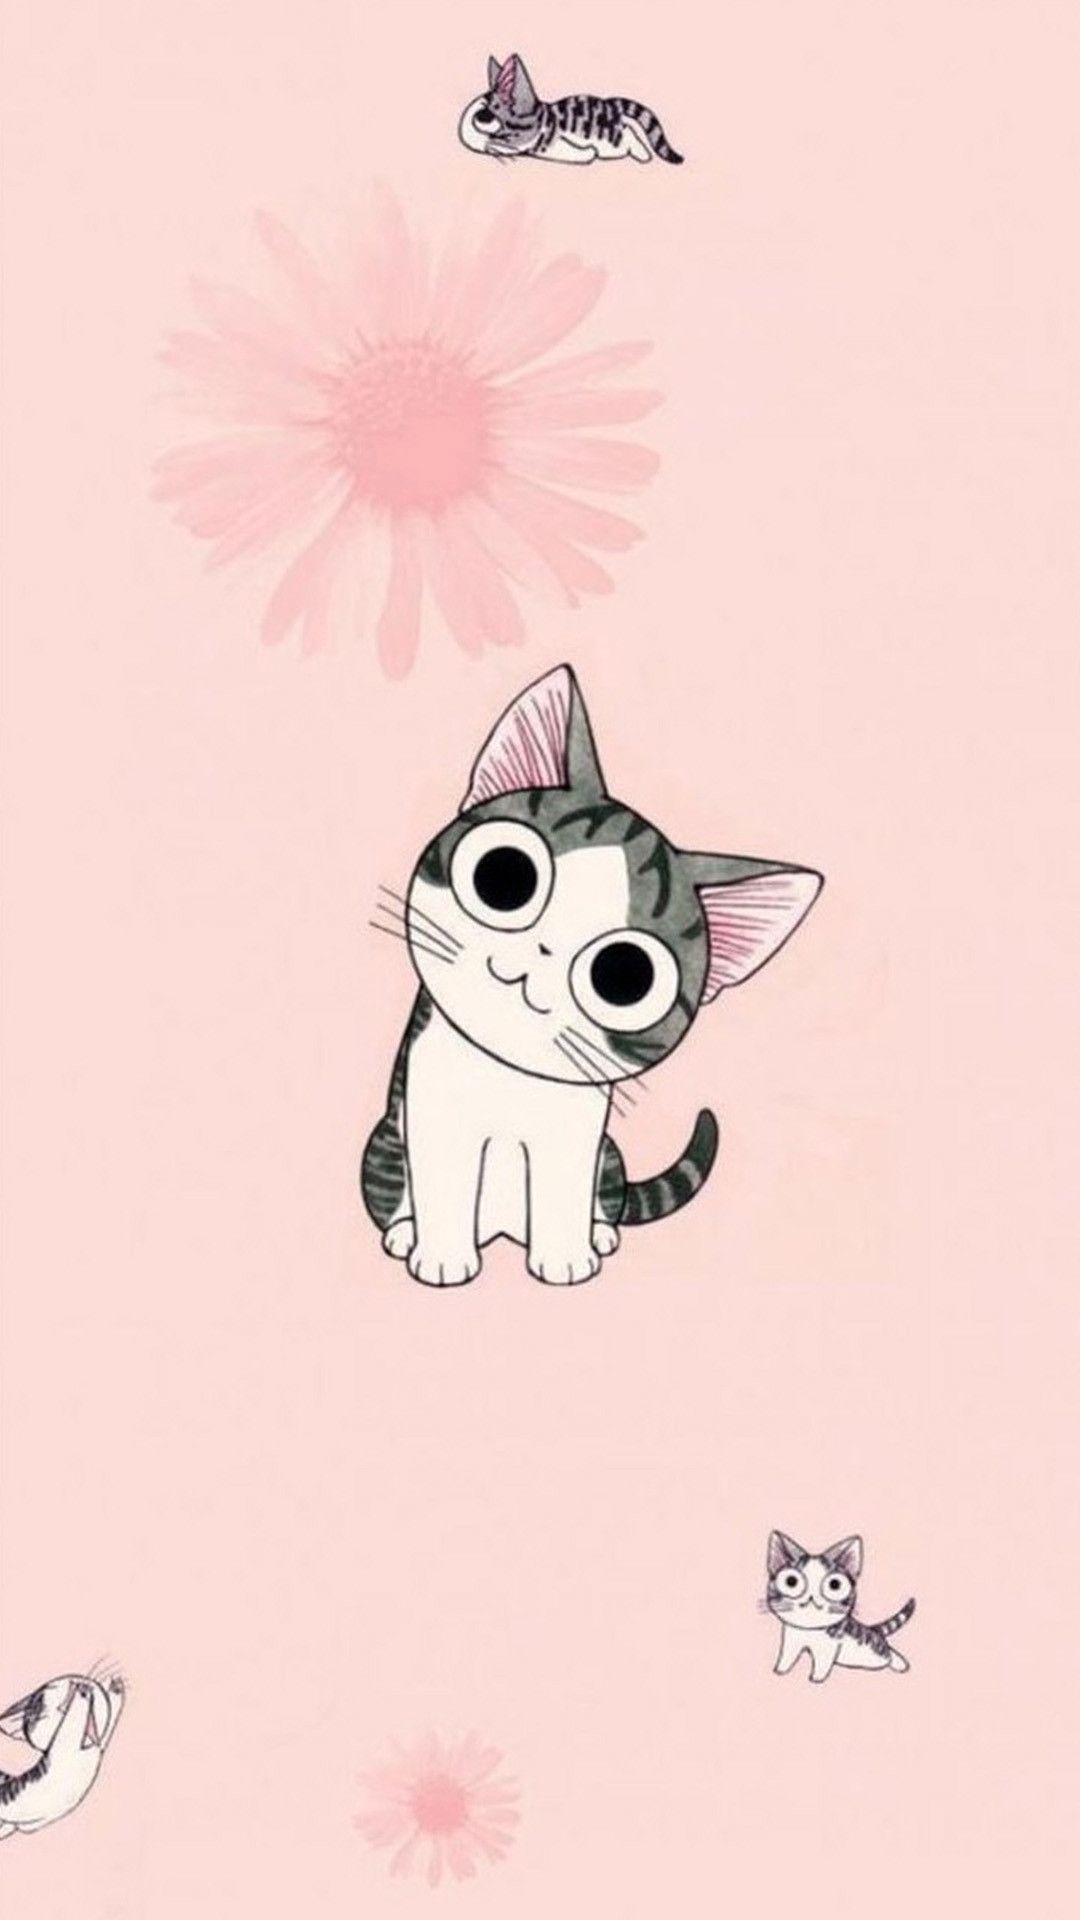 25+] Funny Cartoon Cat Wallpapers - WallpaperSafari